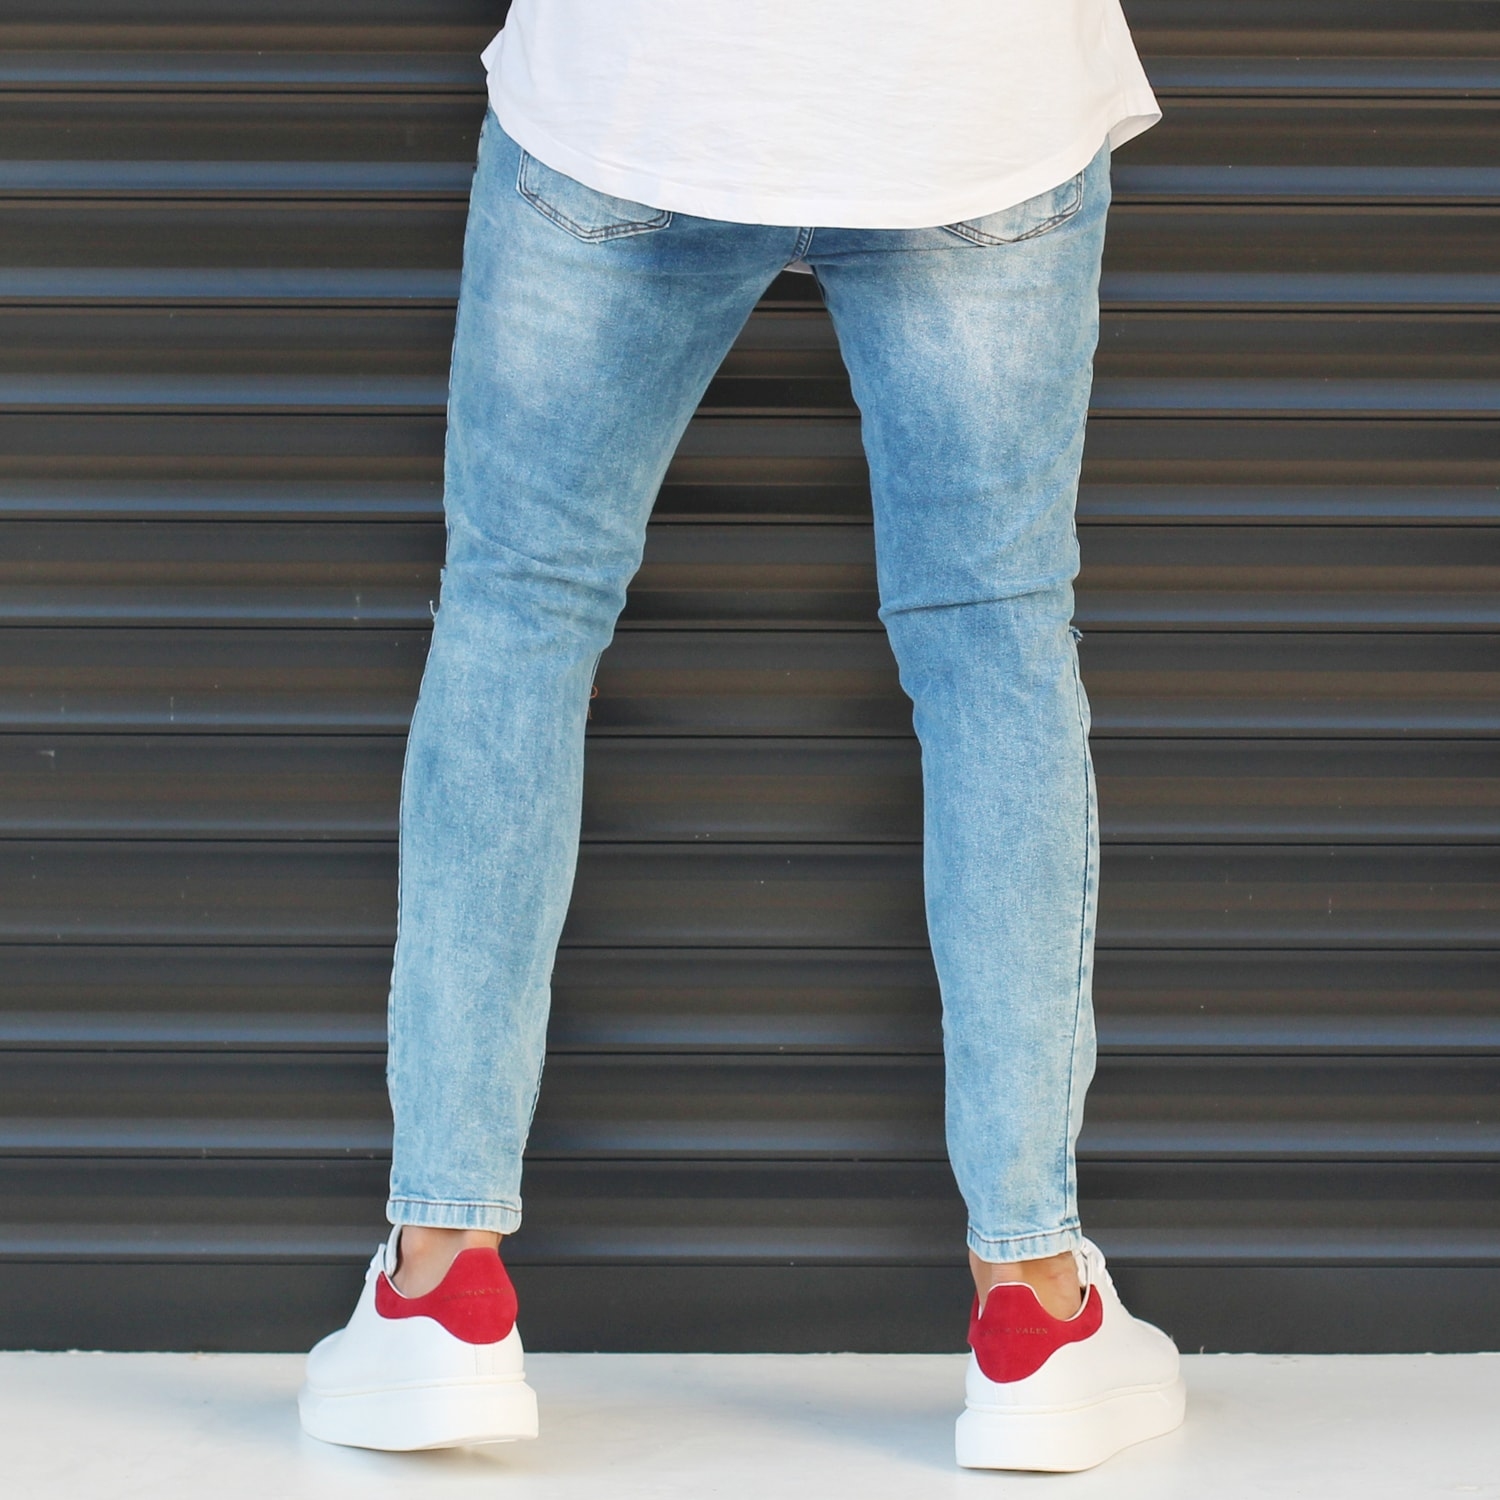 Men's Basic Narrow Leg Sport Jeans With Knee Rips Blue